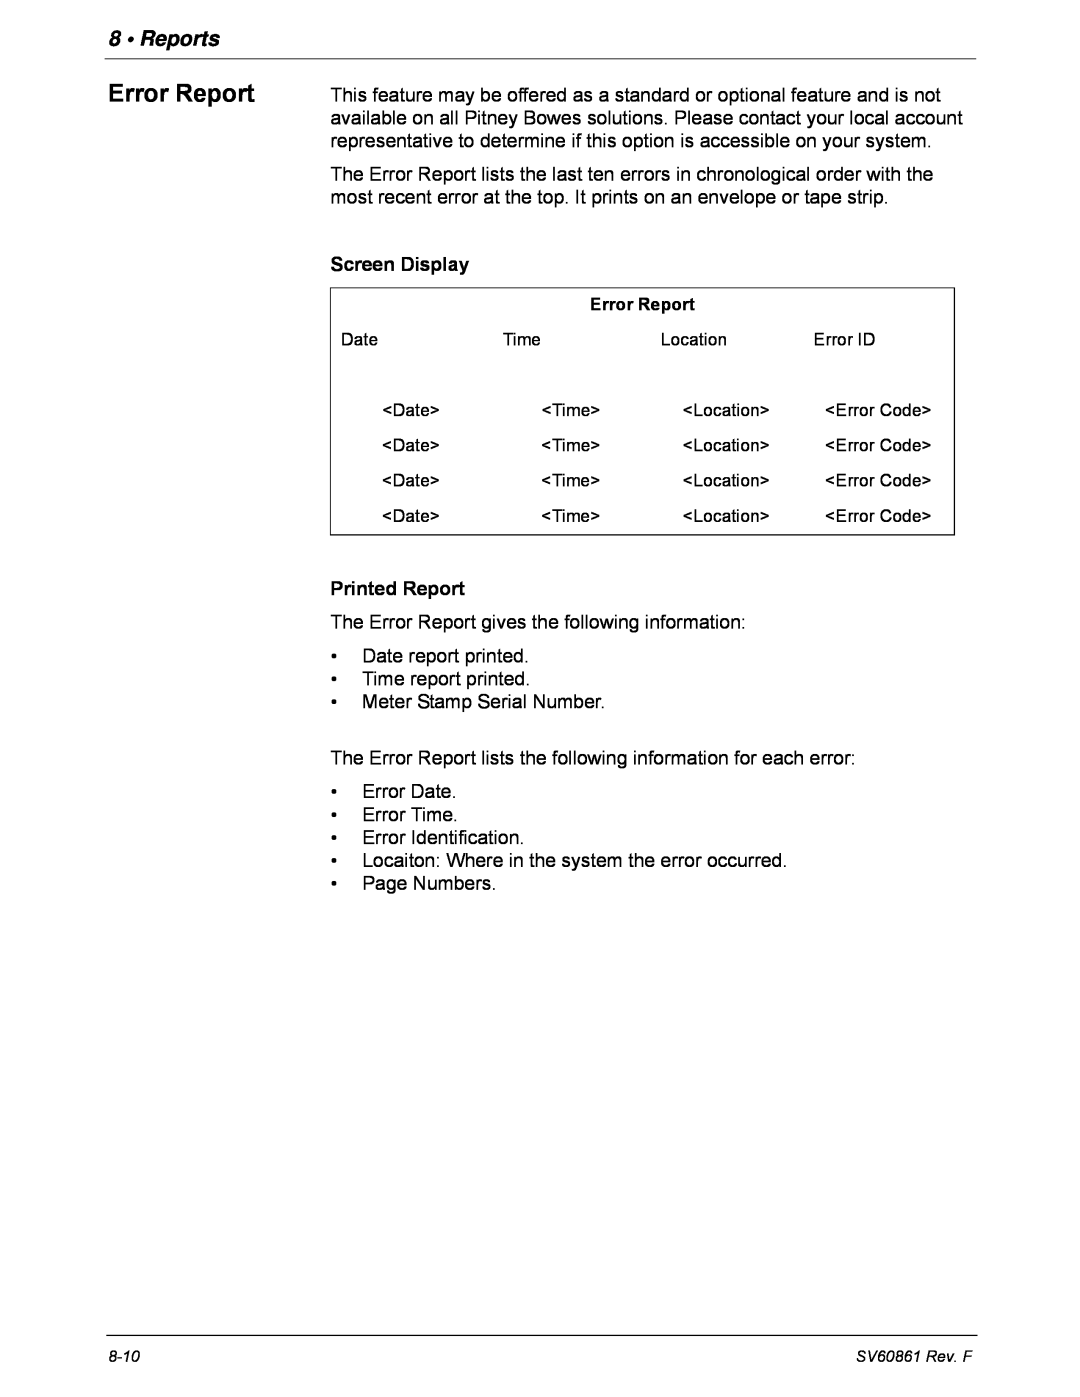 Pitney Bowes DM900, DM800 manual Error Report, Reports, Screen Display, Printed Report 